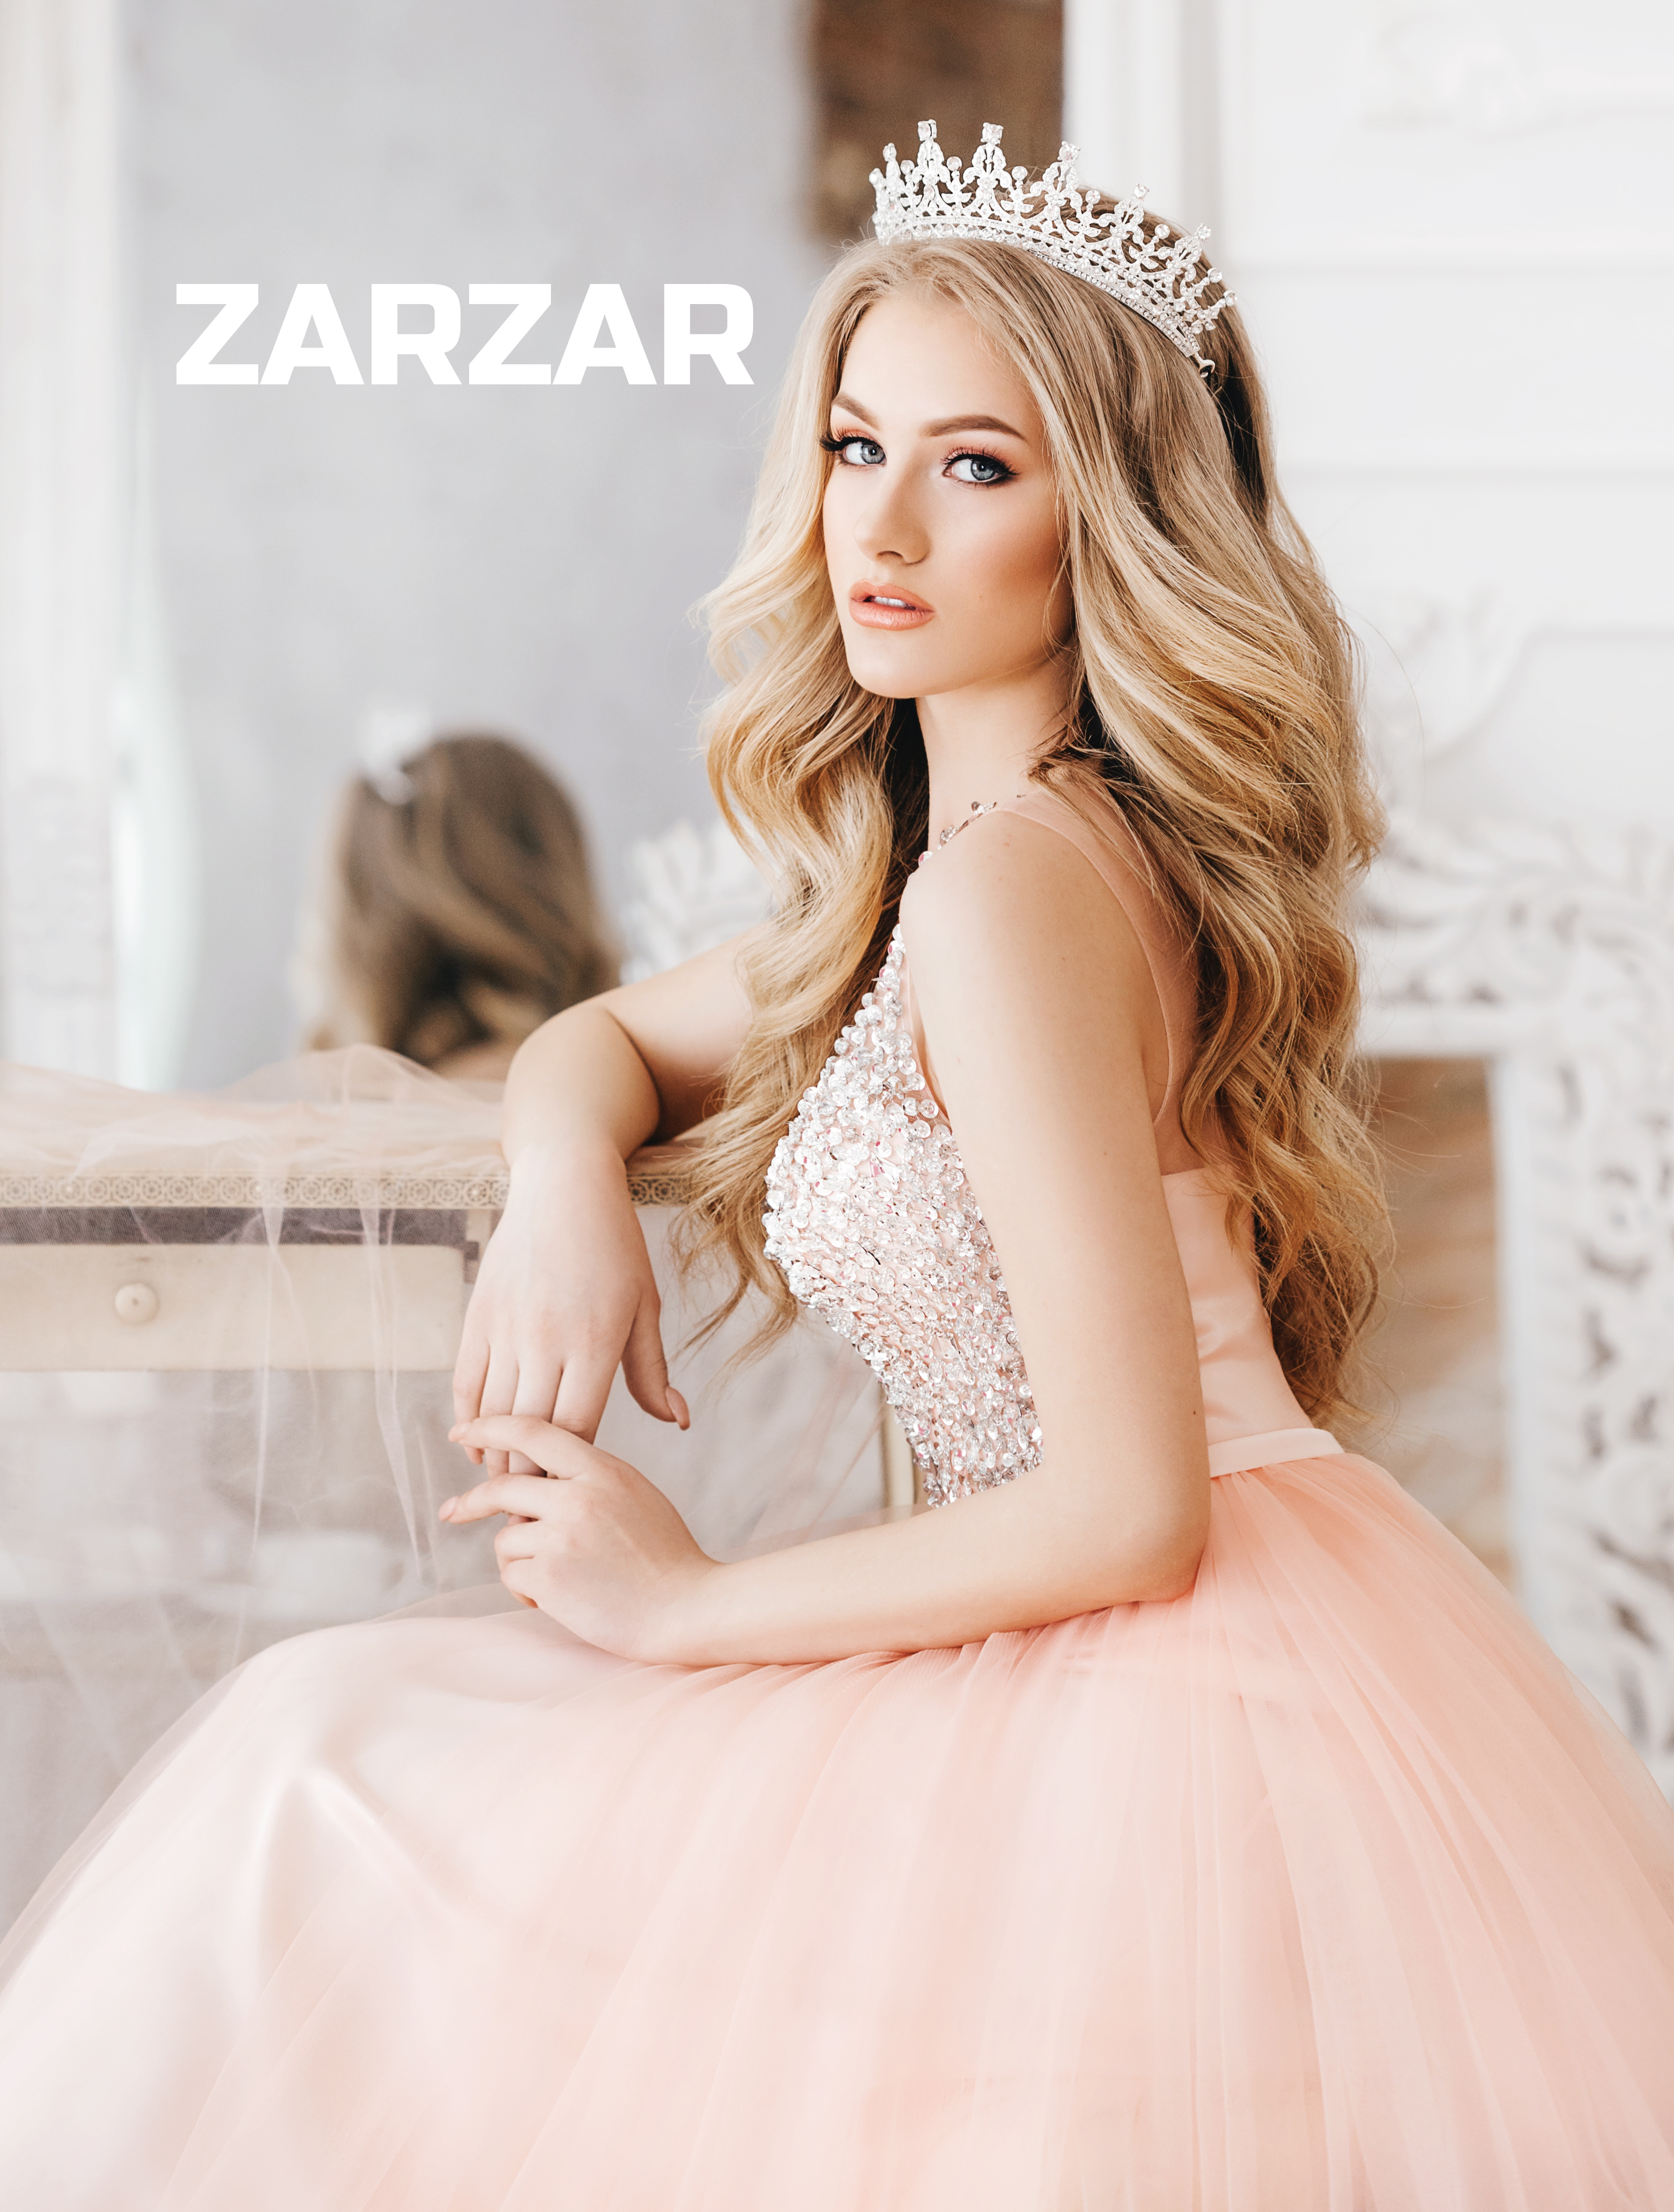 ZARZAR MODELS Fashion Modeling Industry Business Description – ZARZAR MODELS